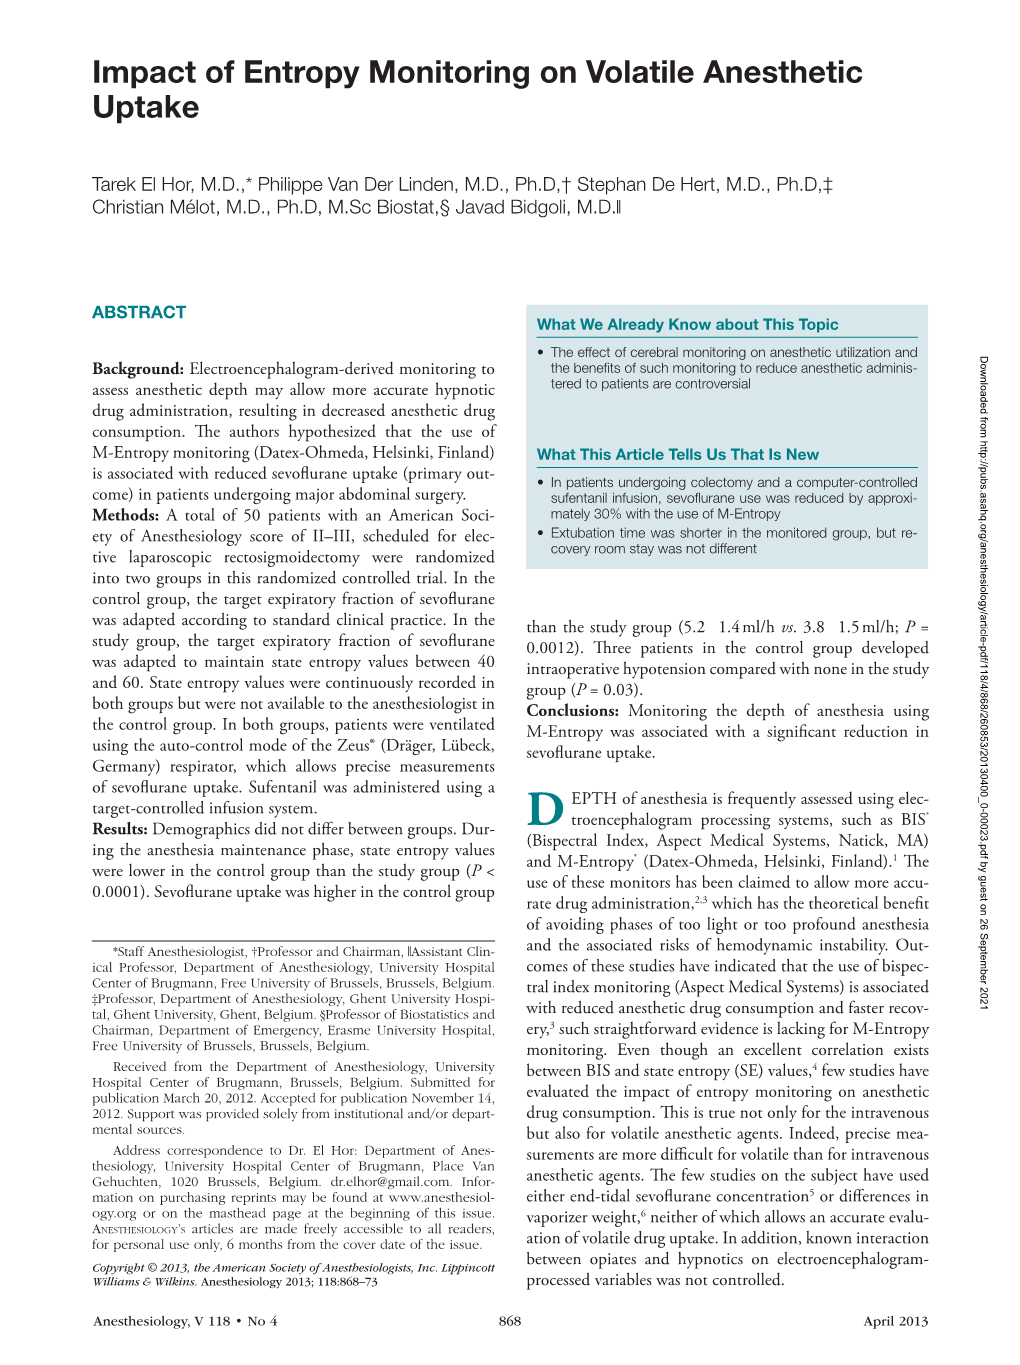 Impact of Entropy Monitoring on Volatile Anesthetic Uptake